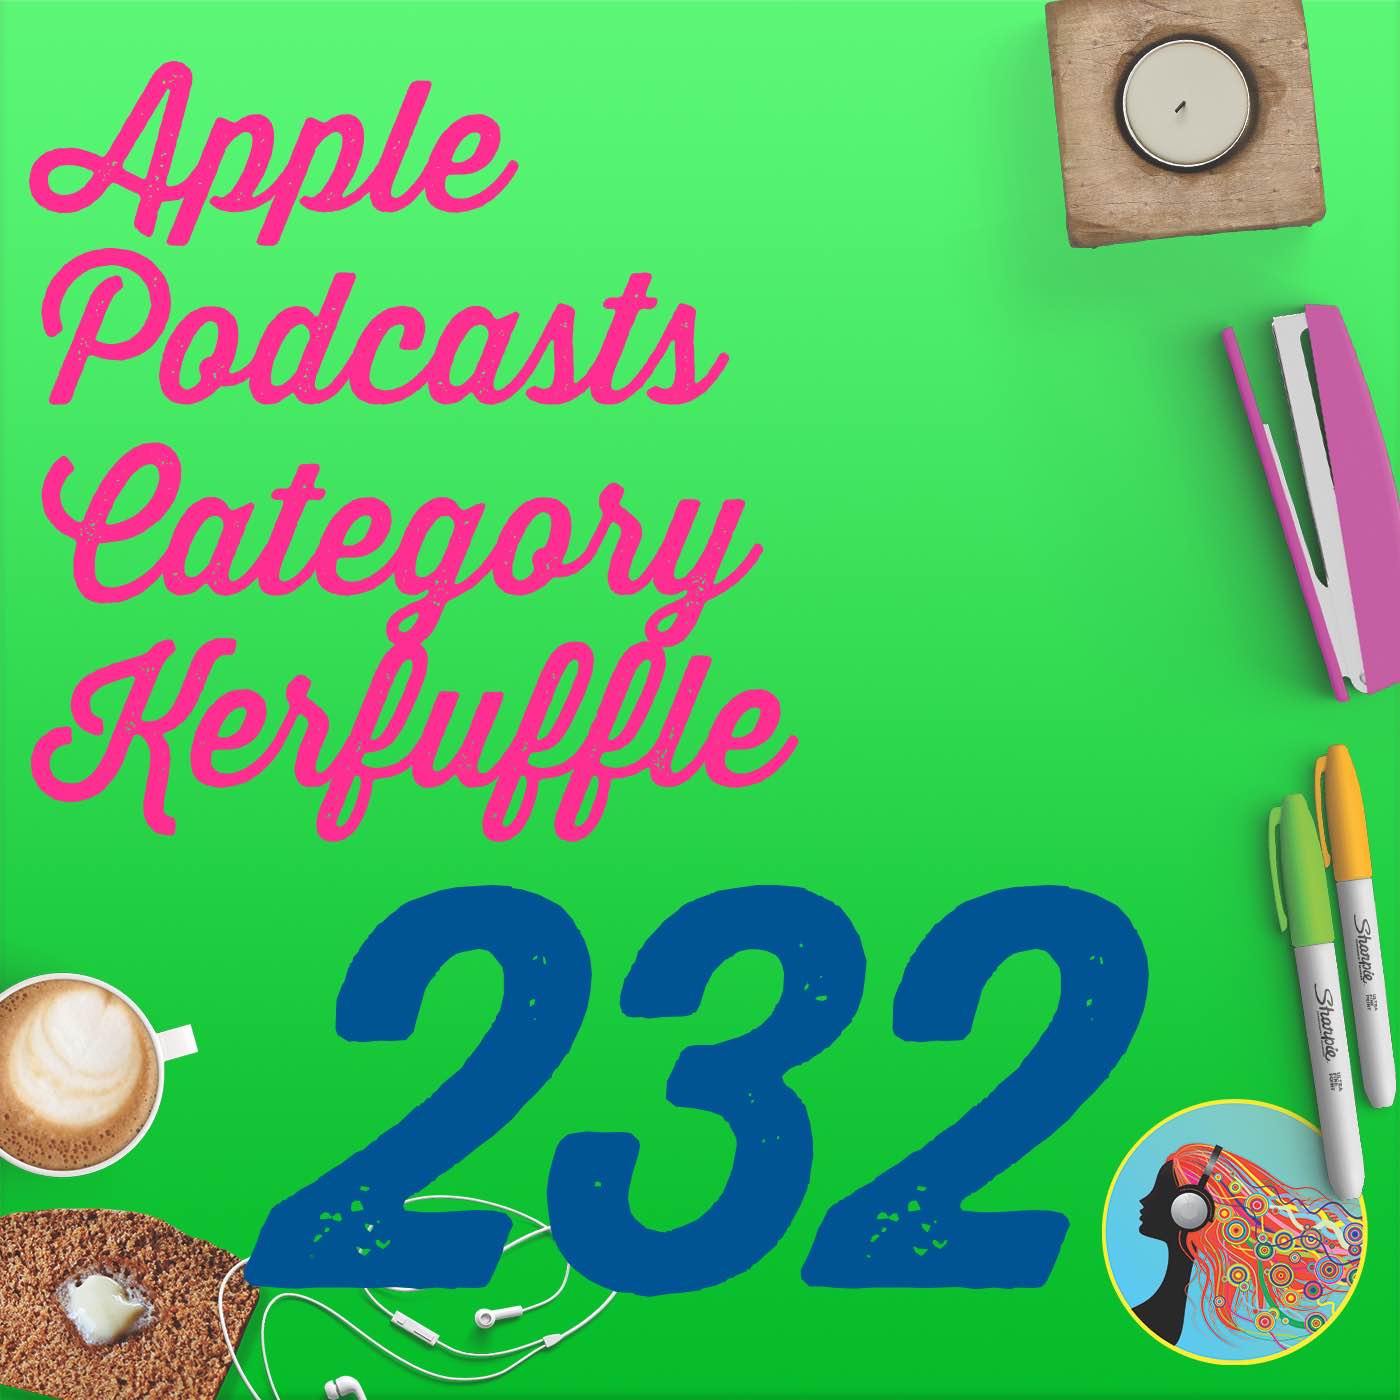 232 Apple Podcasts Category Kerfuffle